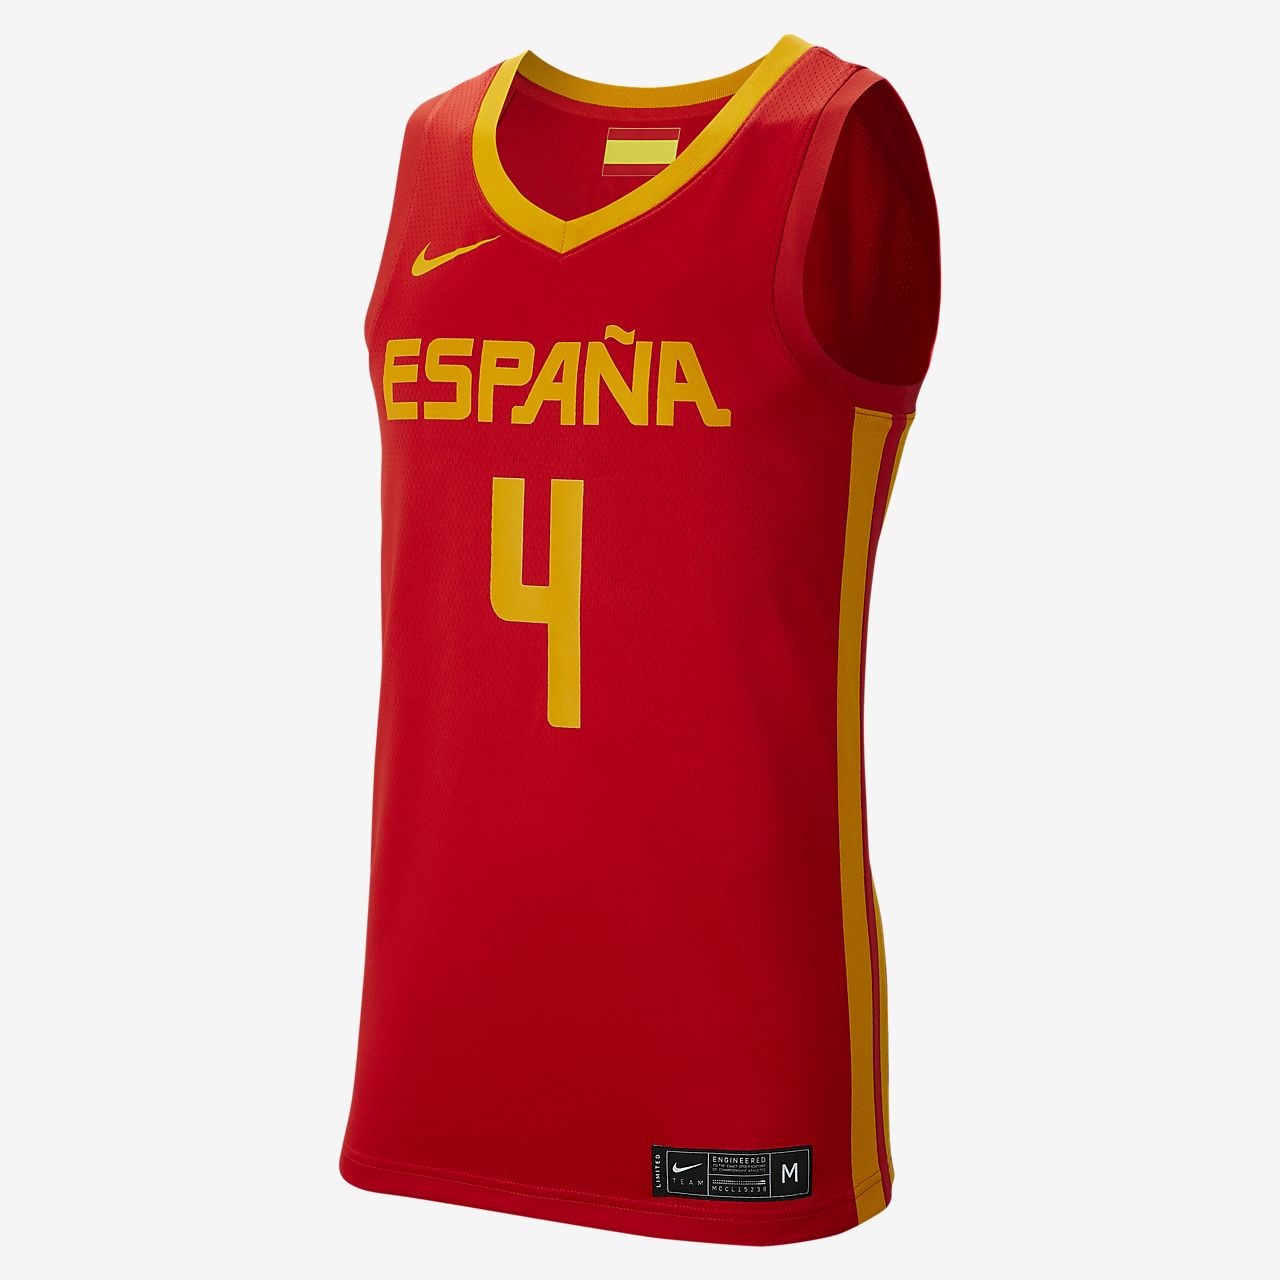 Men's Basketball Jersey. Nike AE